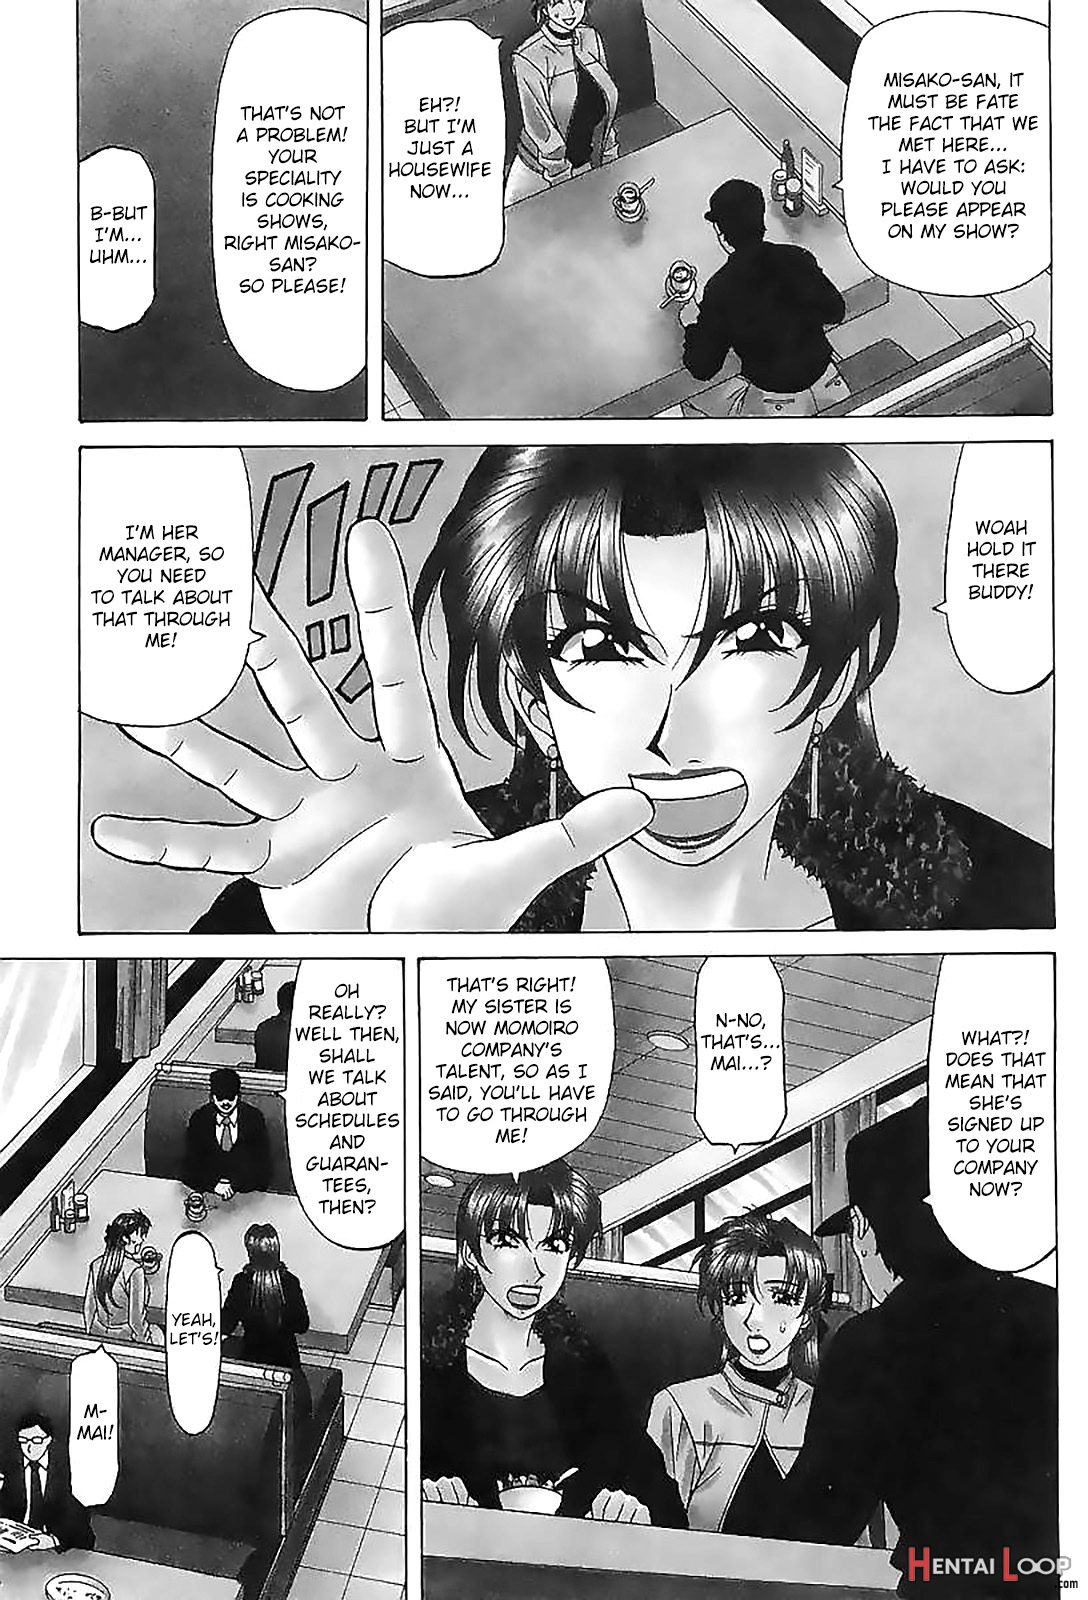 Kochira Momoiro Company Vol. 2 page 7